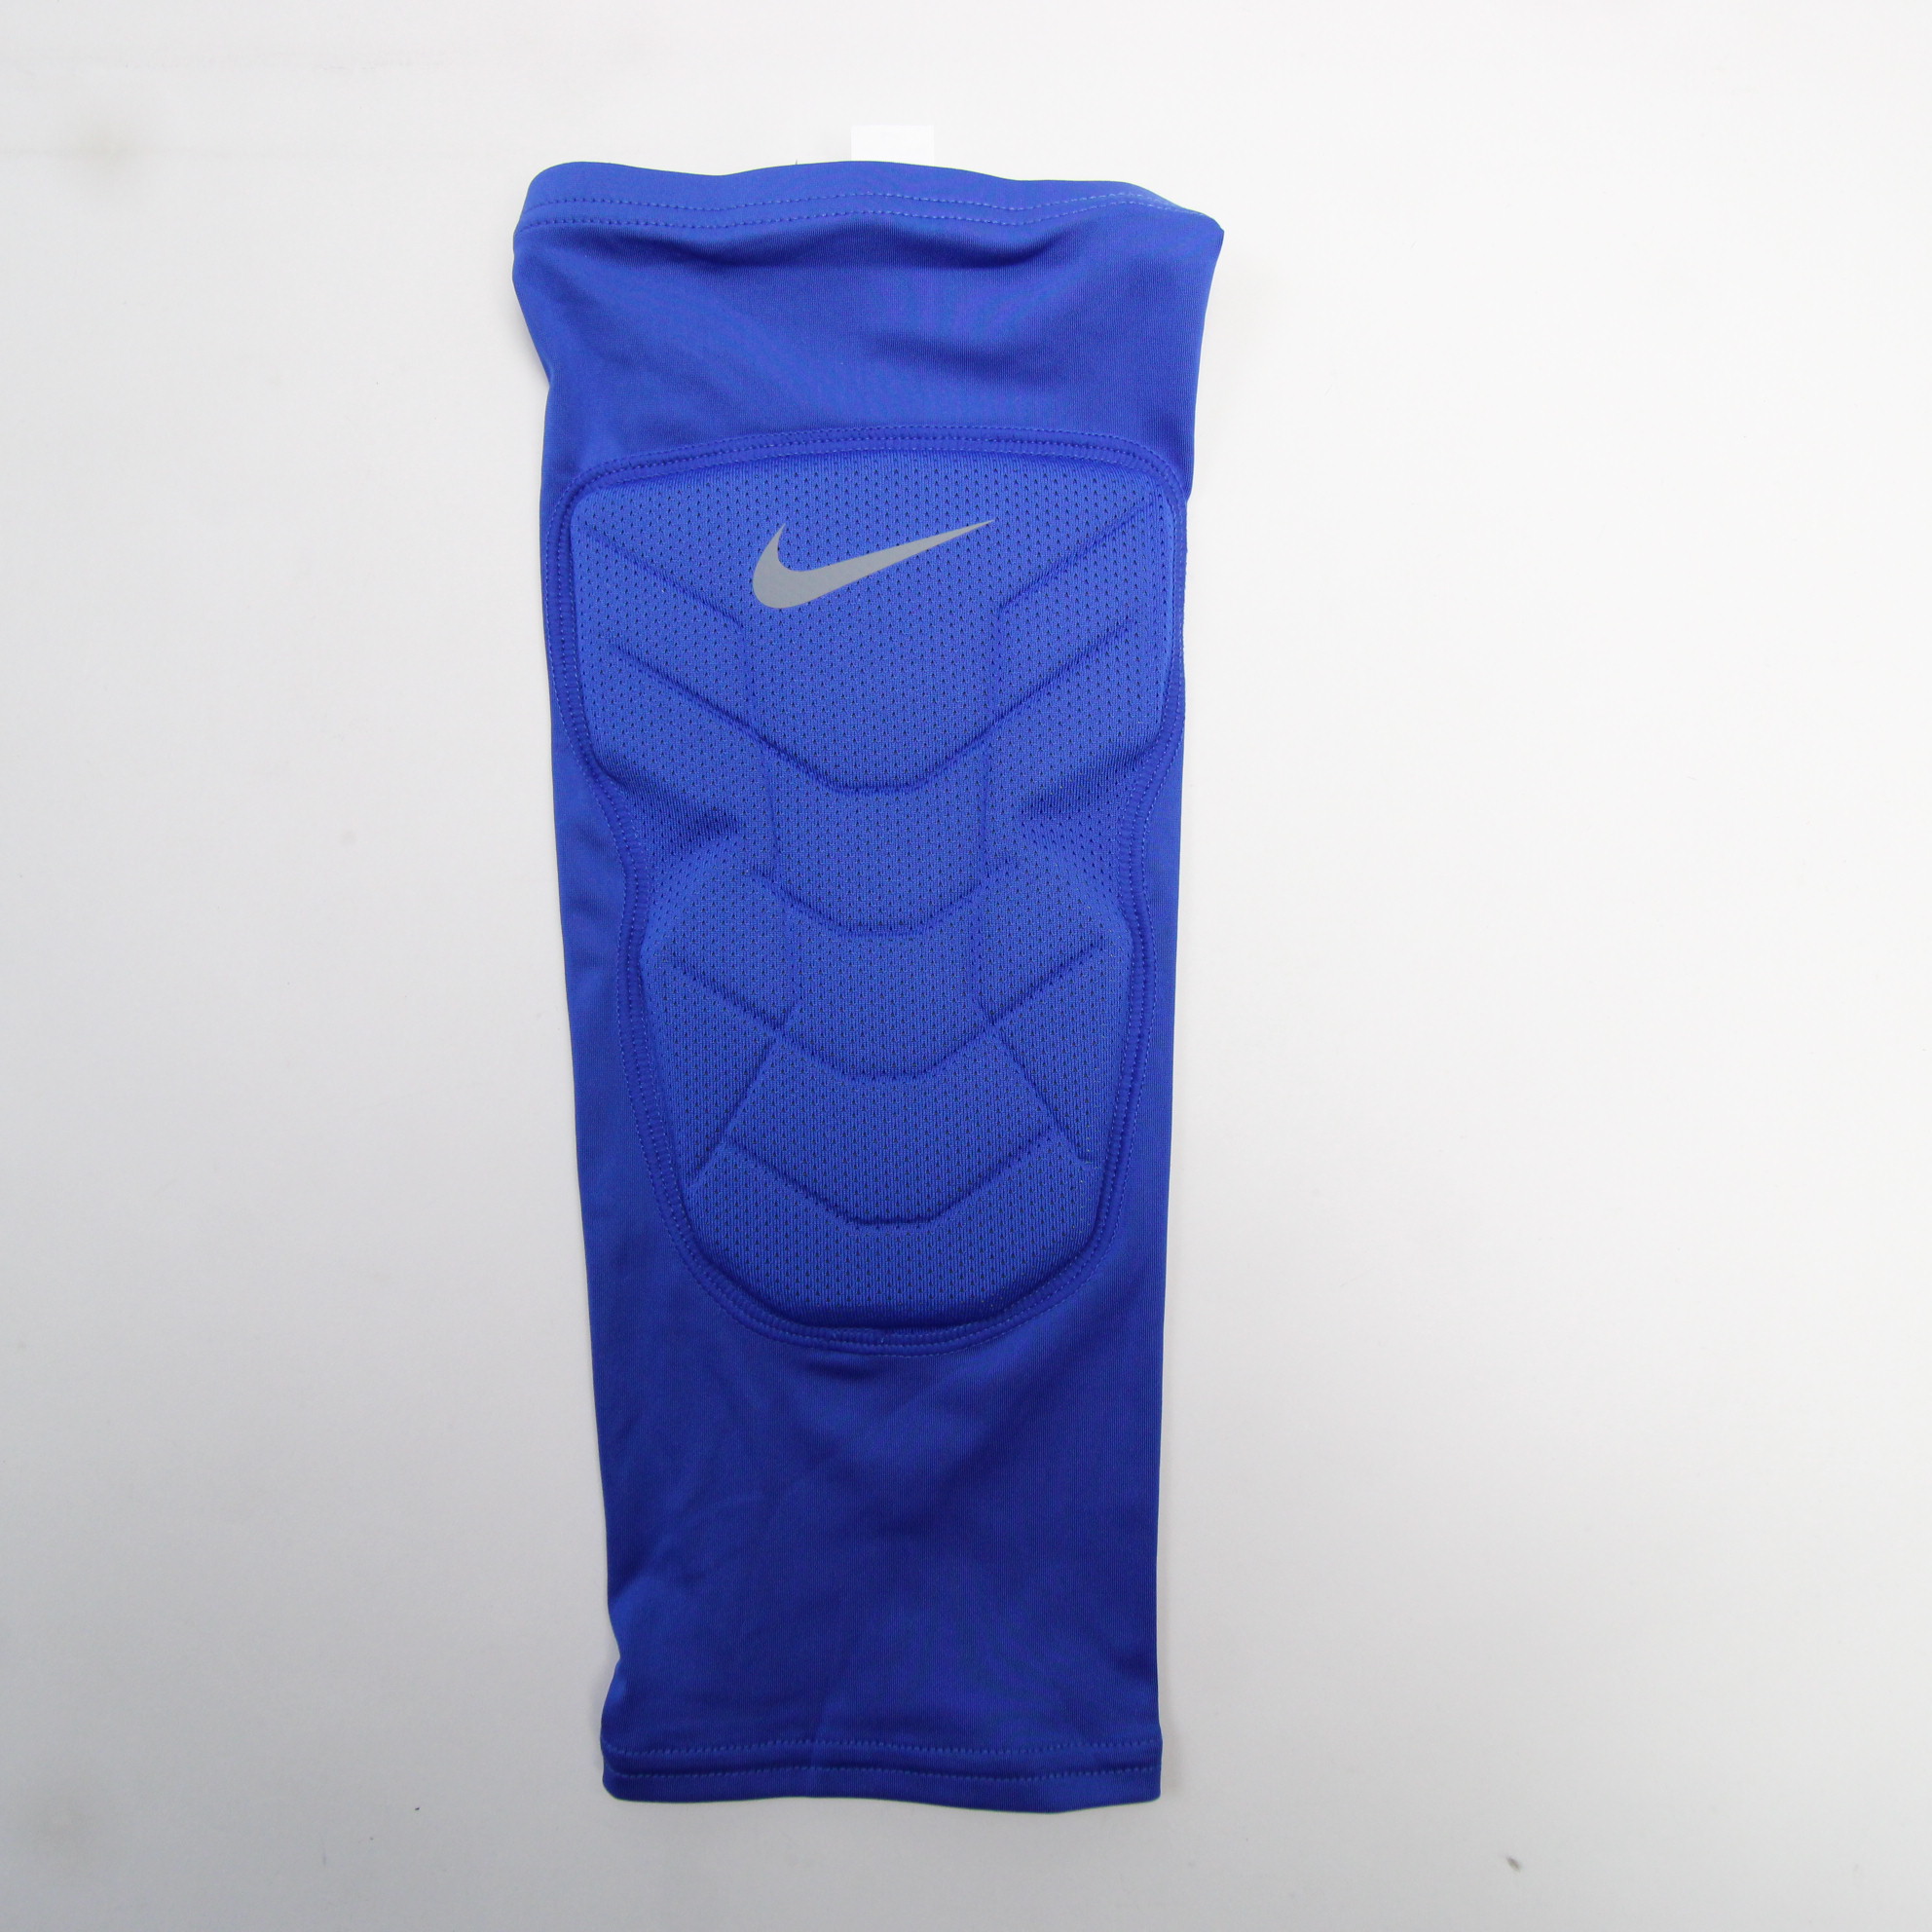 Nike Combat Pads Men's Blue New | eBay